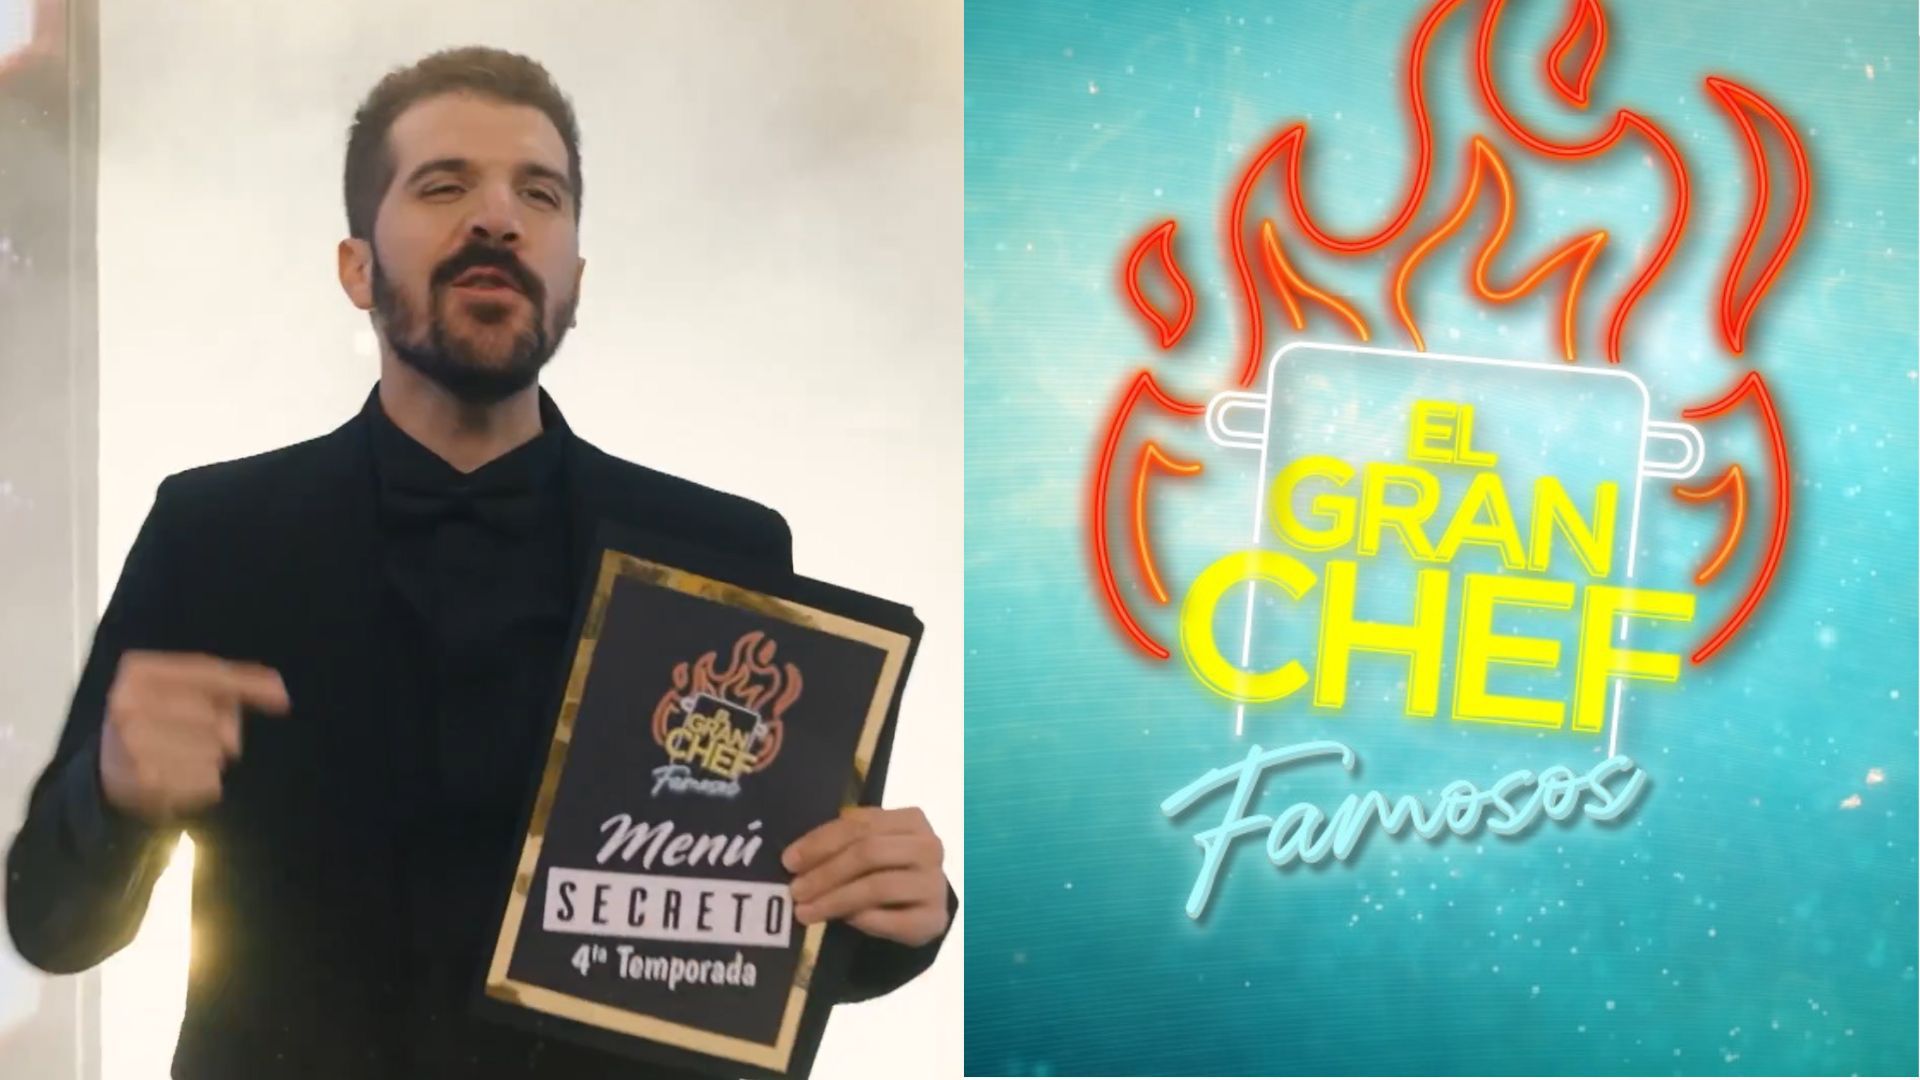 El Gran Chef Famosos′: José Peláez anunció la cuarta temporada del concurso de cocina. Latina TV.